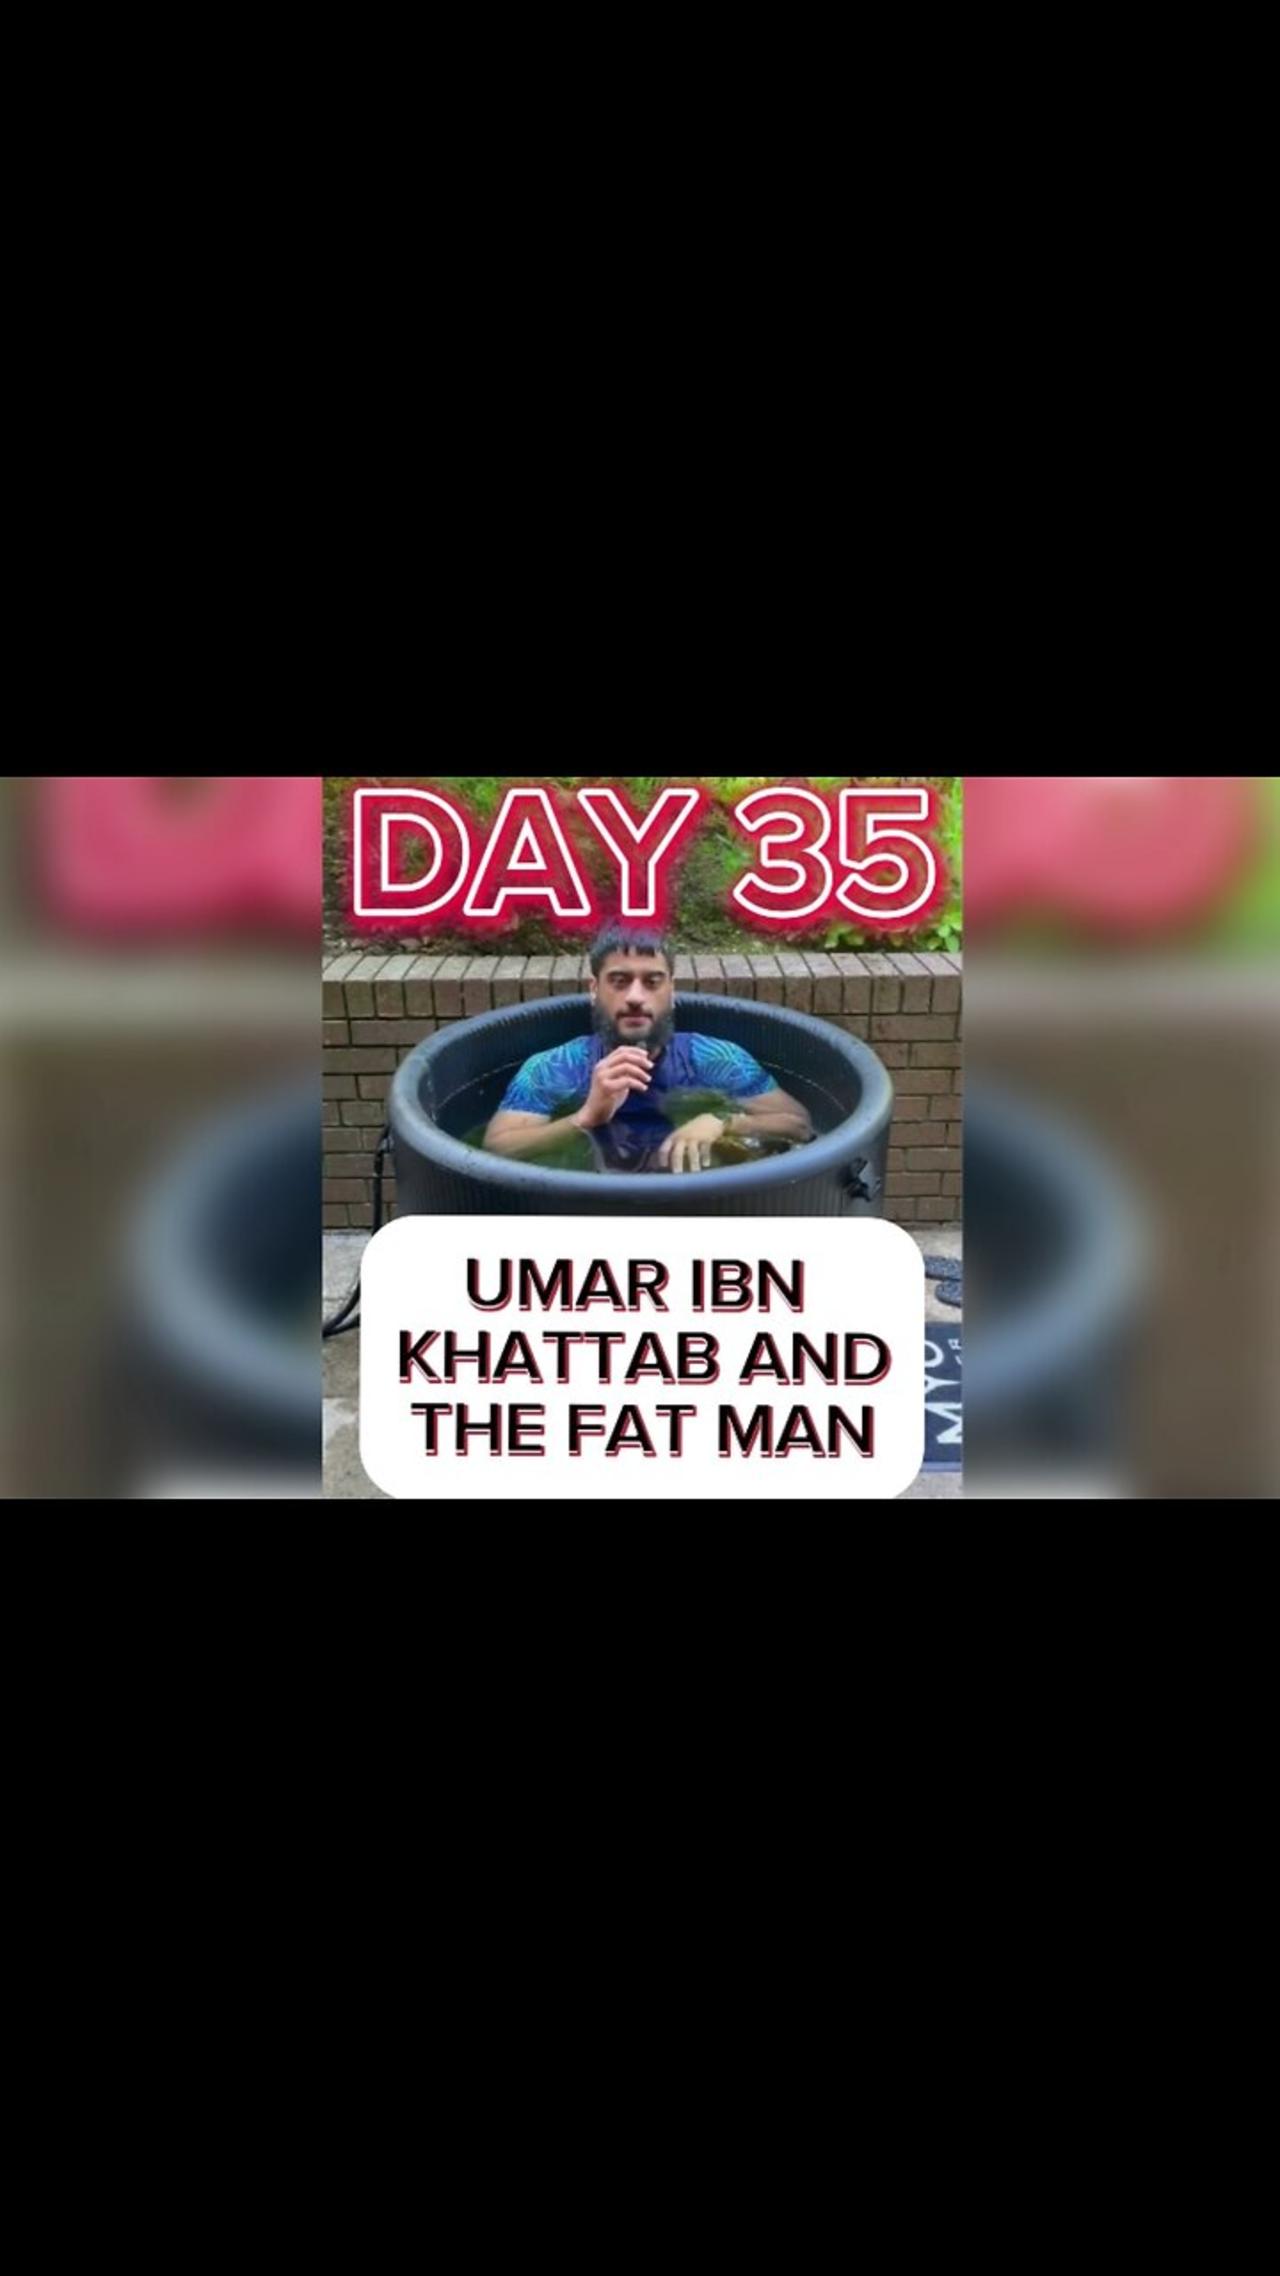 UMAR IBN KHATTAB AND THE FAT MAN🔥